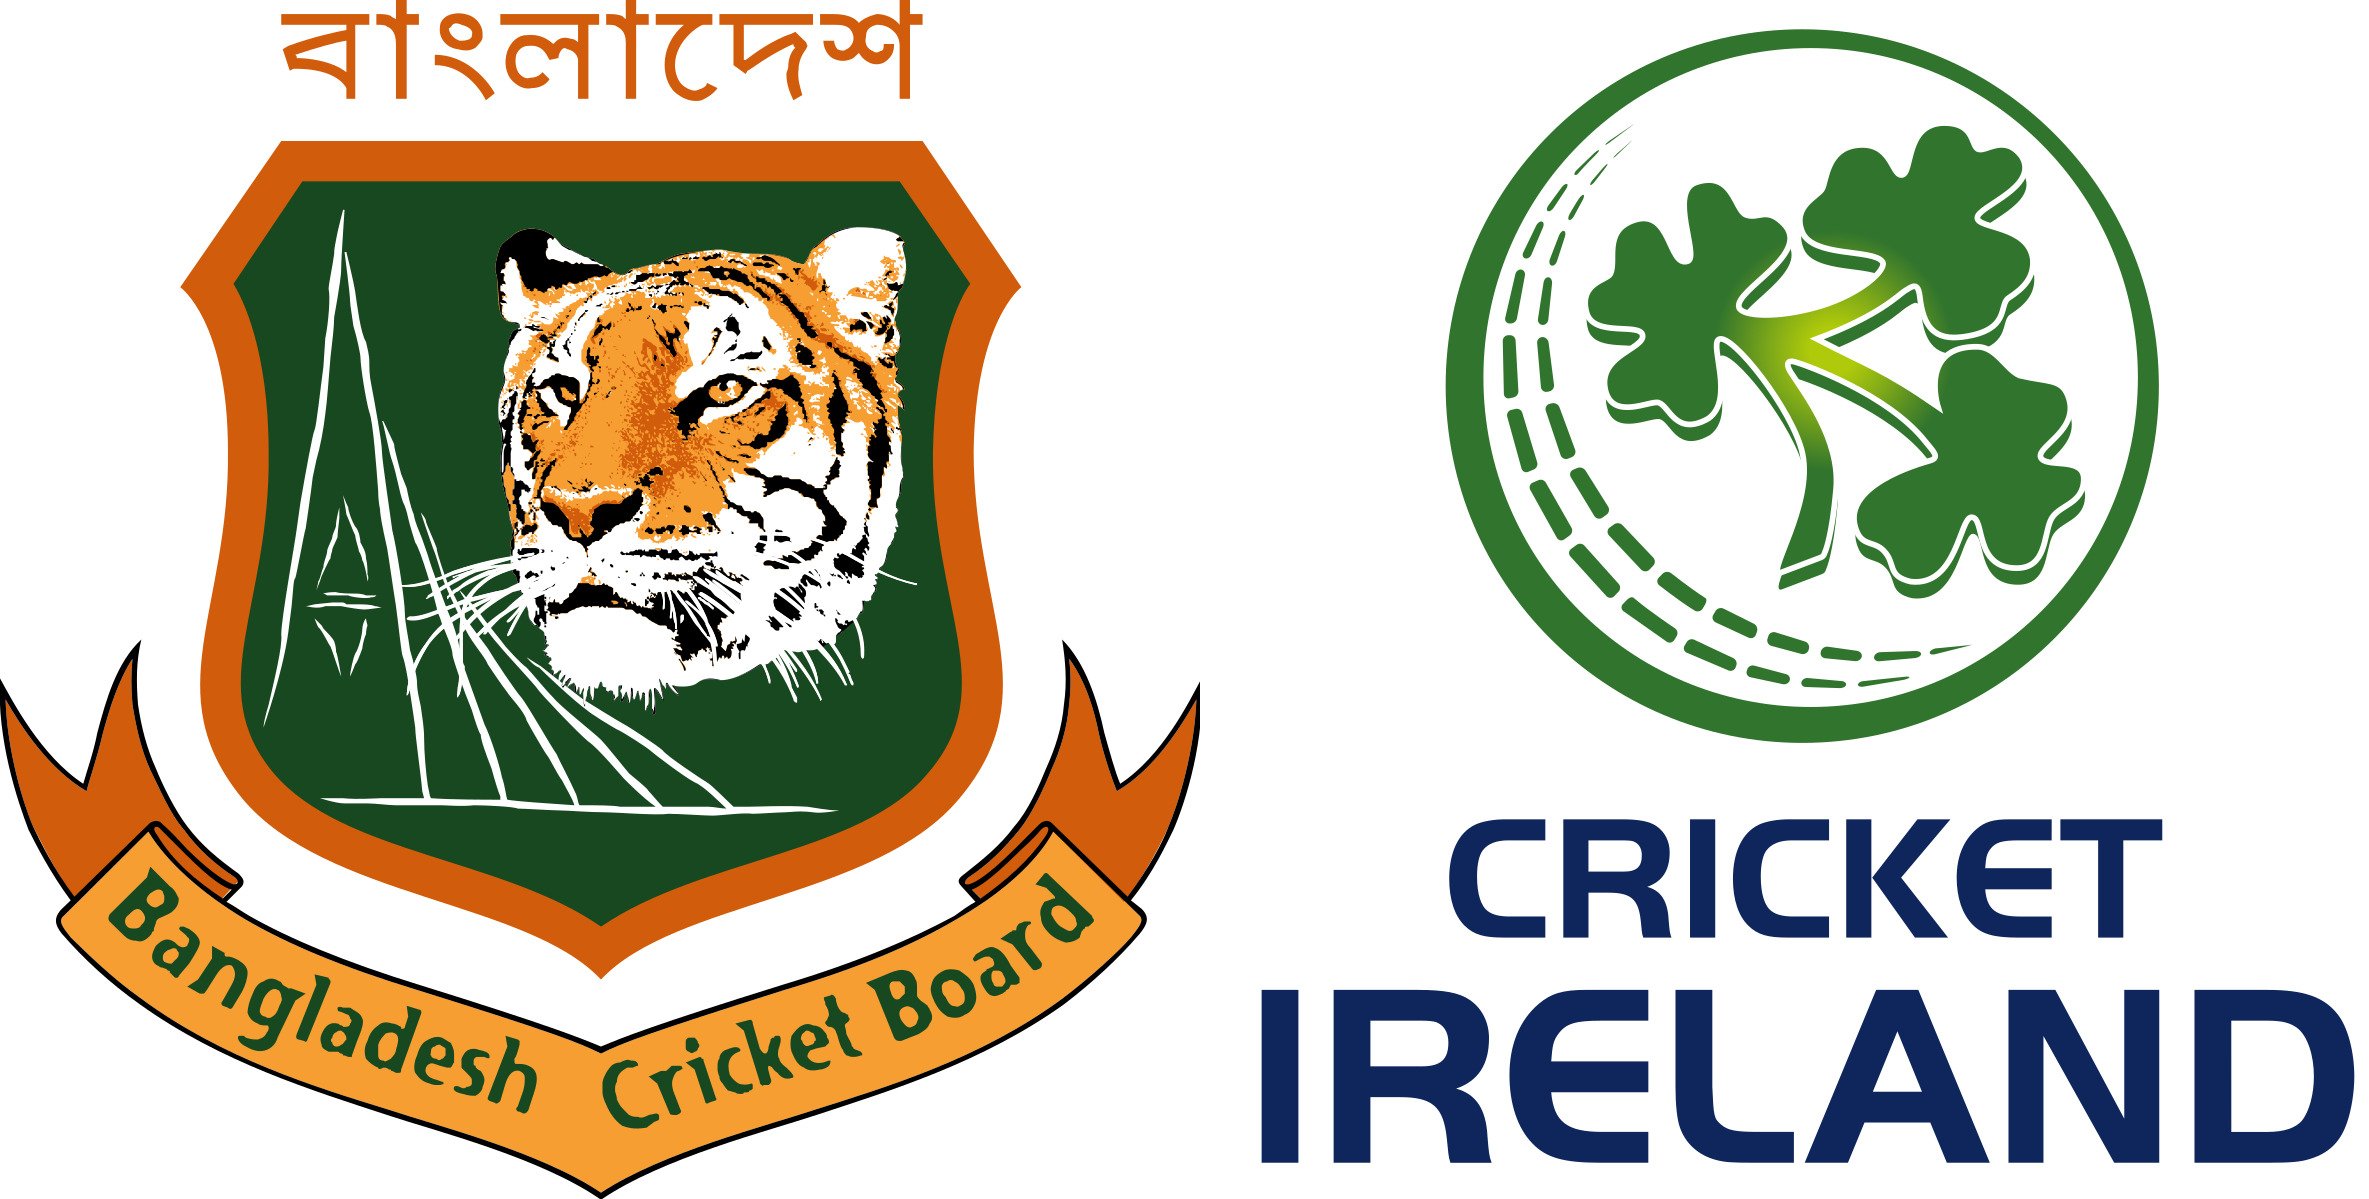 Ireland wins toss, bats 1st in 3rd ODI against Bangladesh